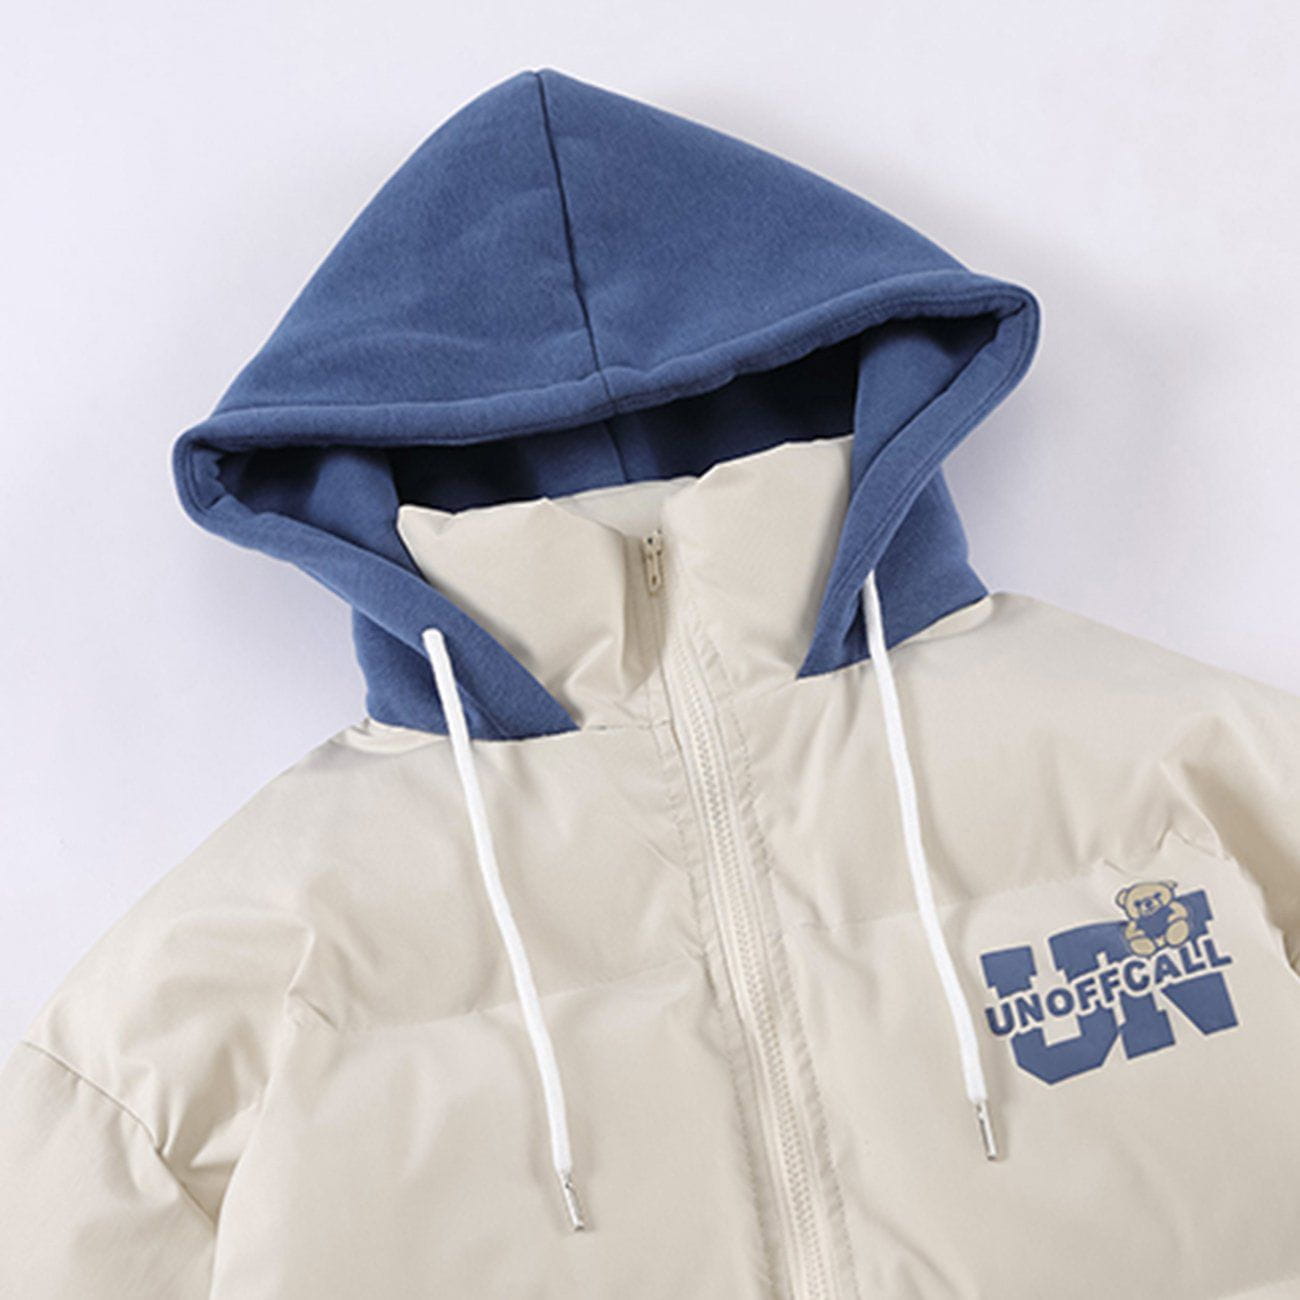 LUXENFY™ - Love Bear Print Hooded Winter Coats luxenfy.com